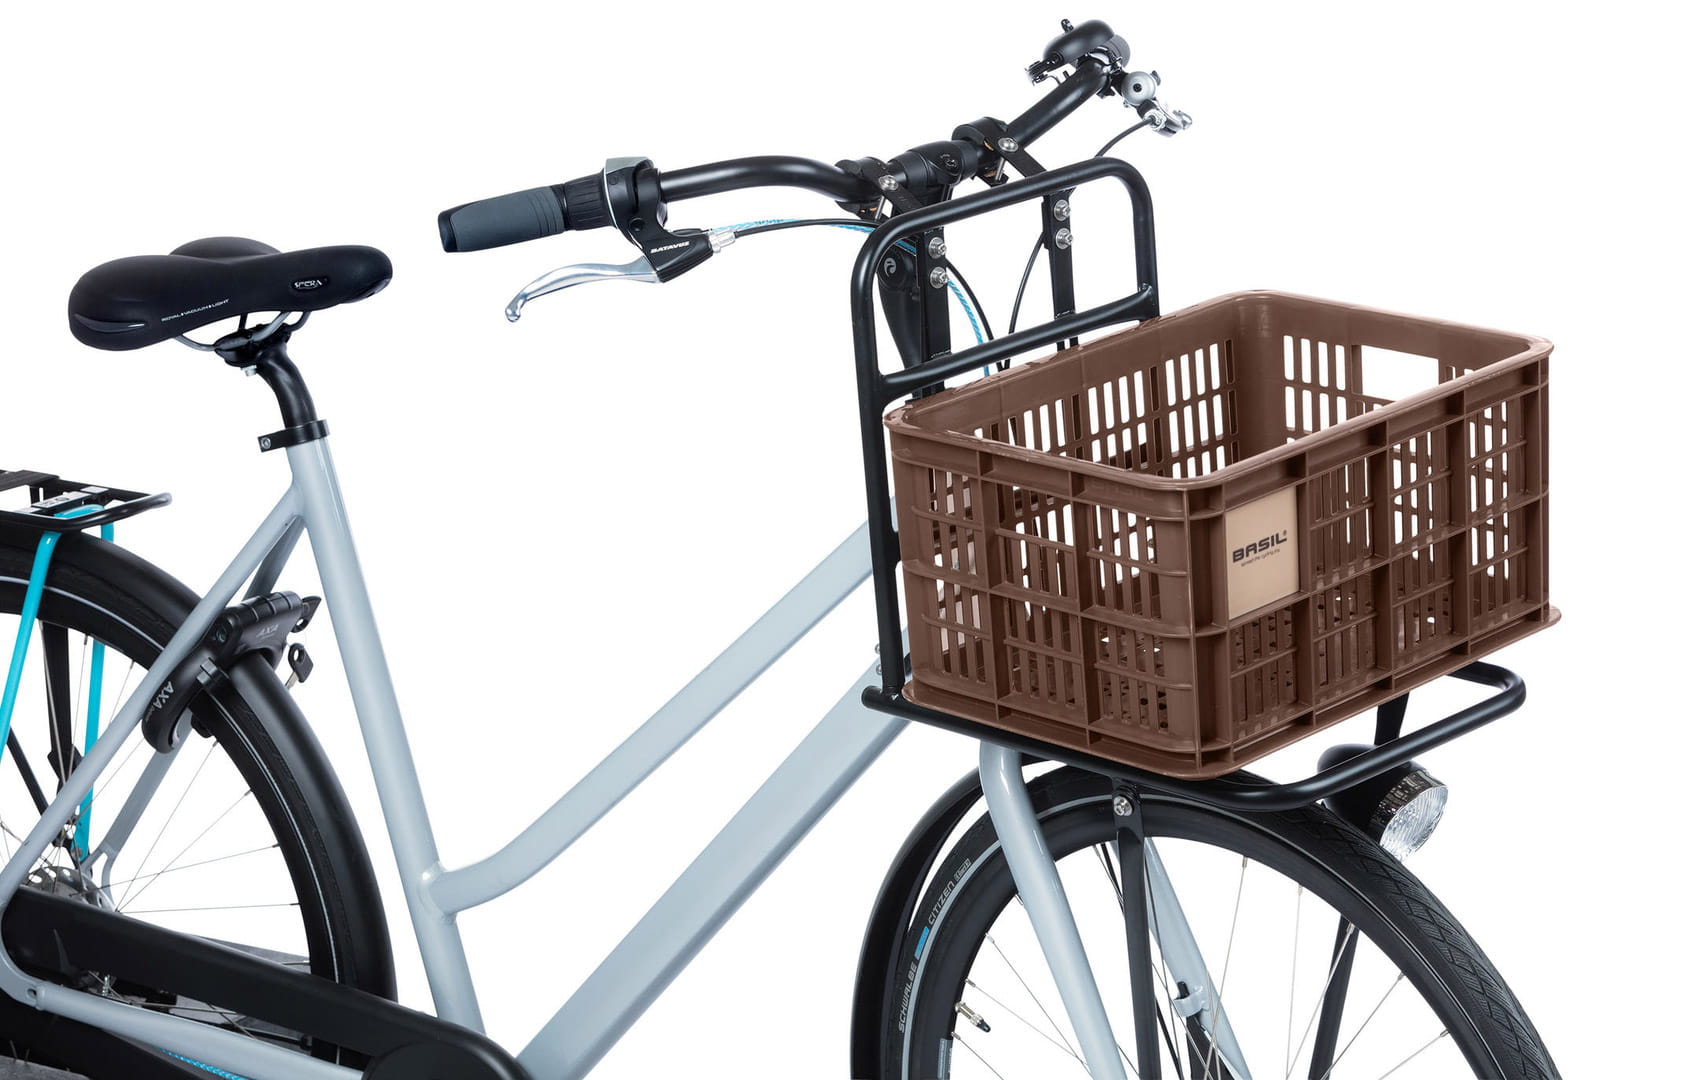 Basil Crate MIK Bike Transportkorb Fahrradkiste (abnehmbar)